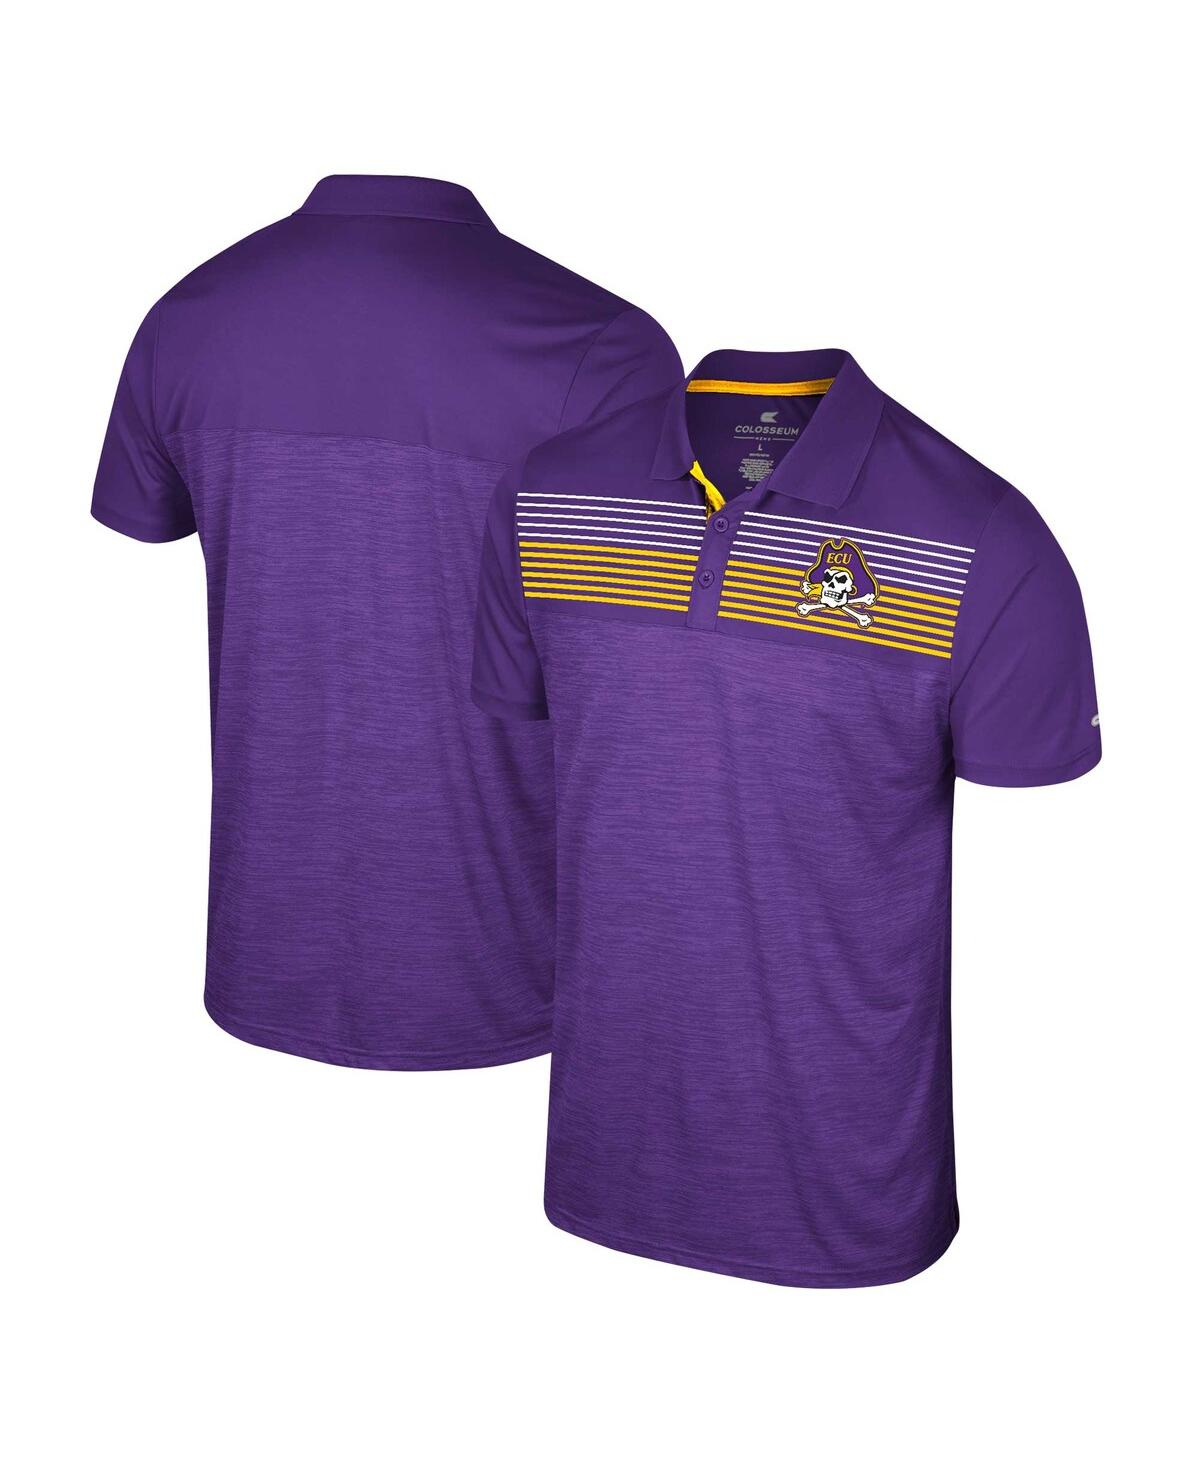 Men's Colosseum Purple Ecu Pirates Langmore Polo Shirt - Purple